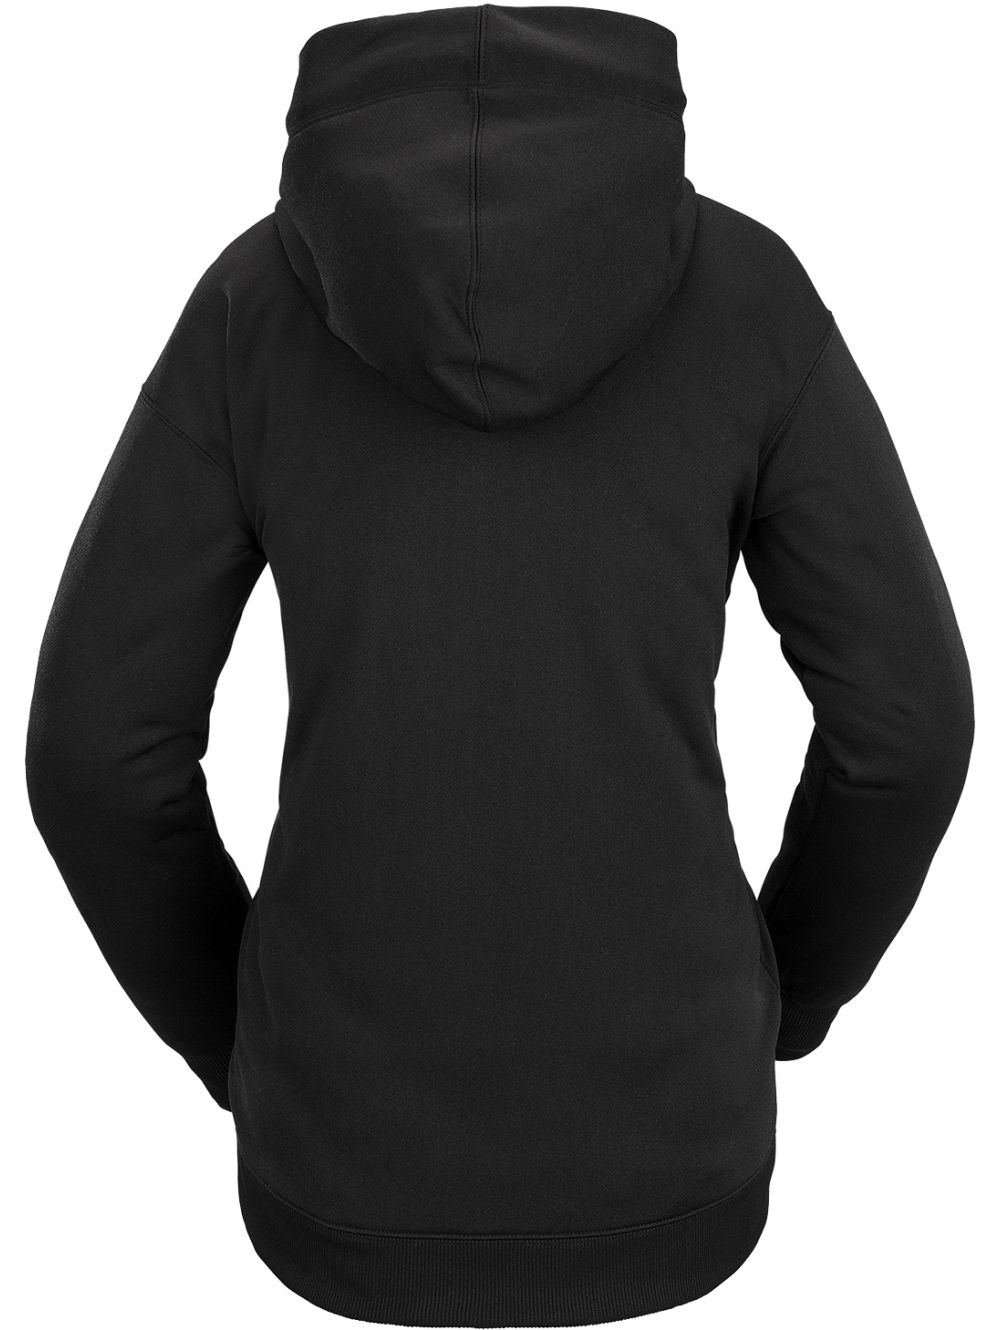 Sweatshirt de Neige Femme Volcom Spring Shred - Noir